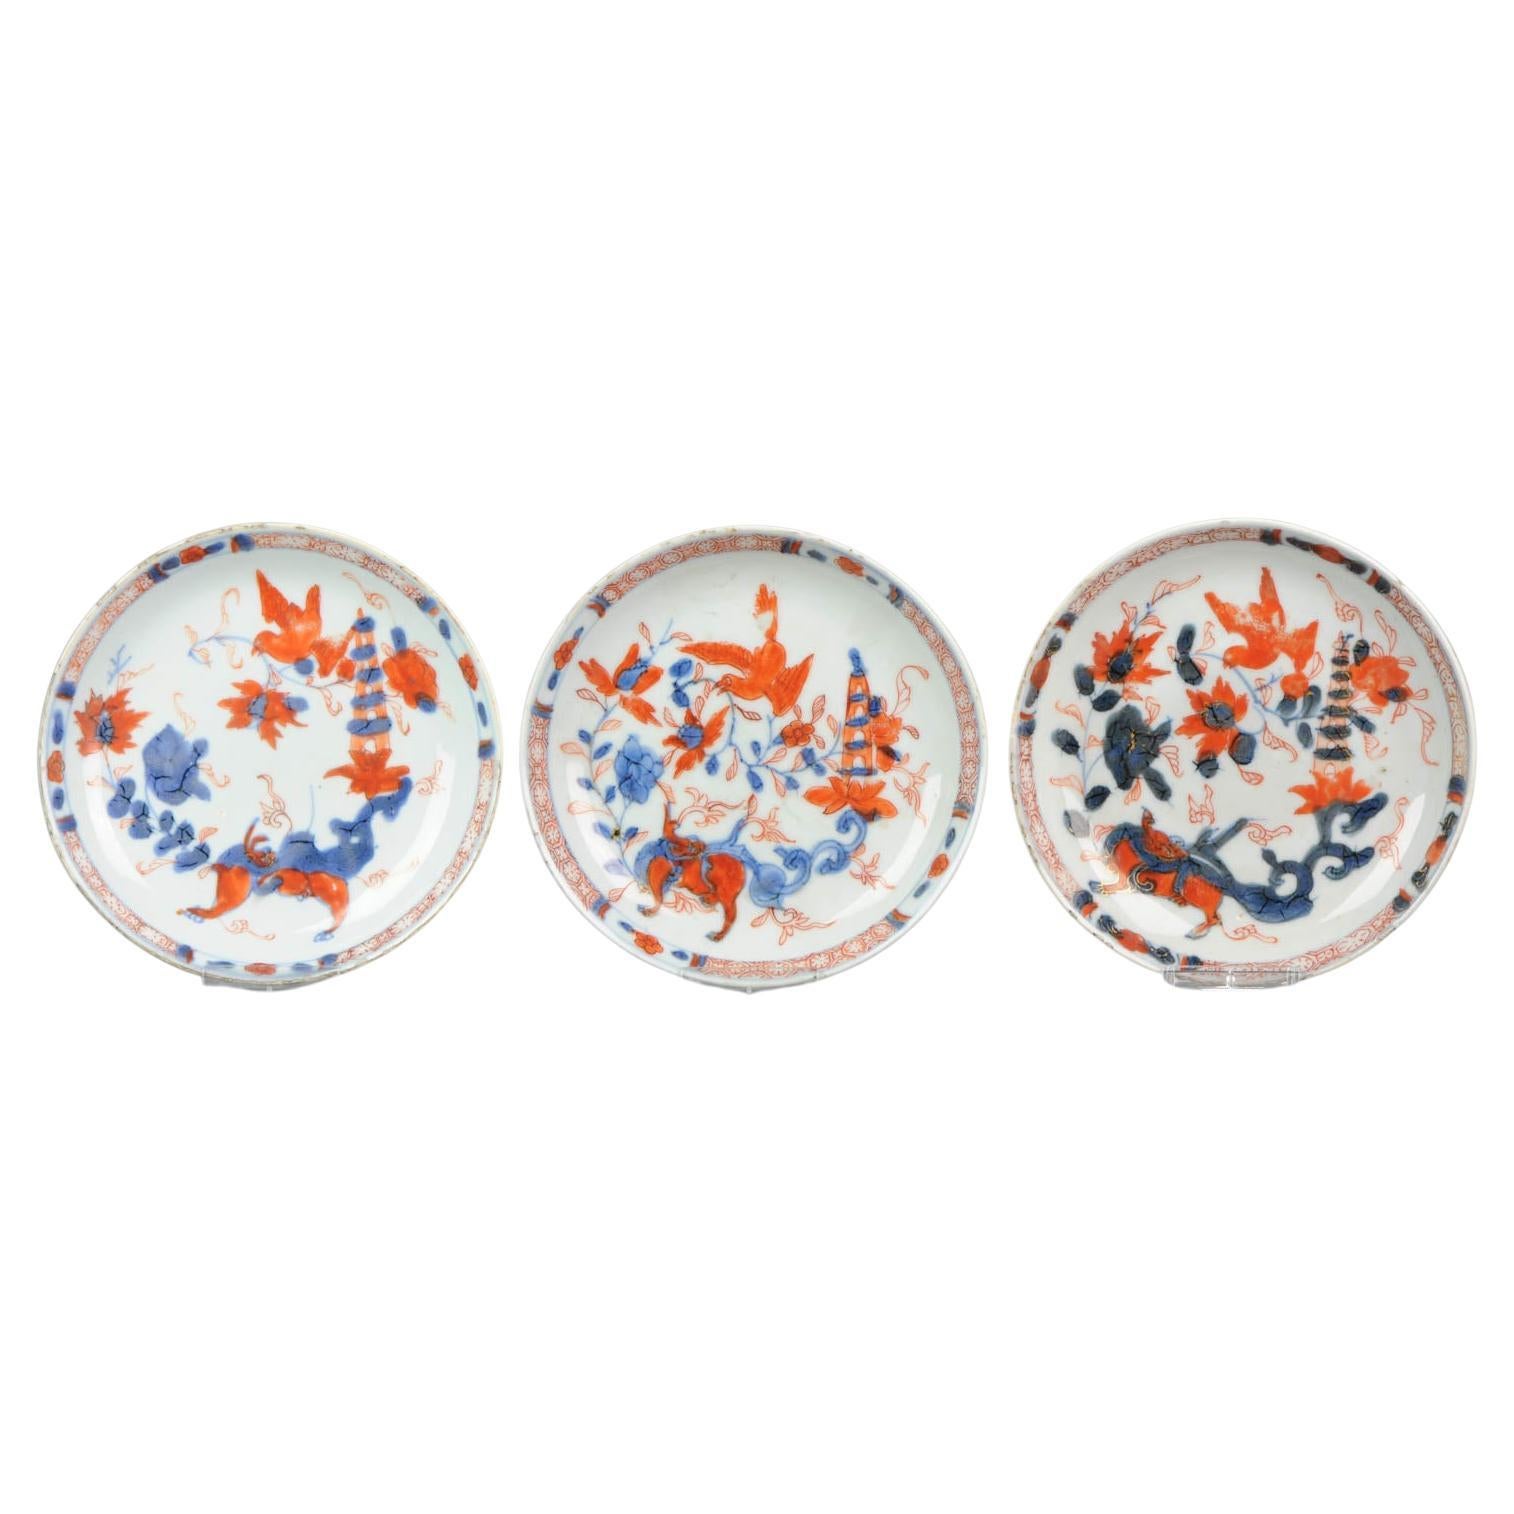 Set of 3 Antique Imari Dish Qing Chinese Porcelain China Imari, 18th Century